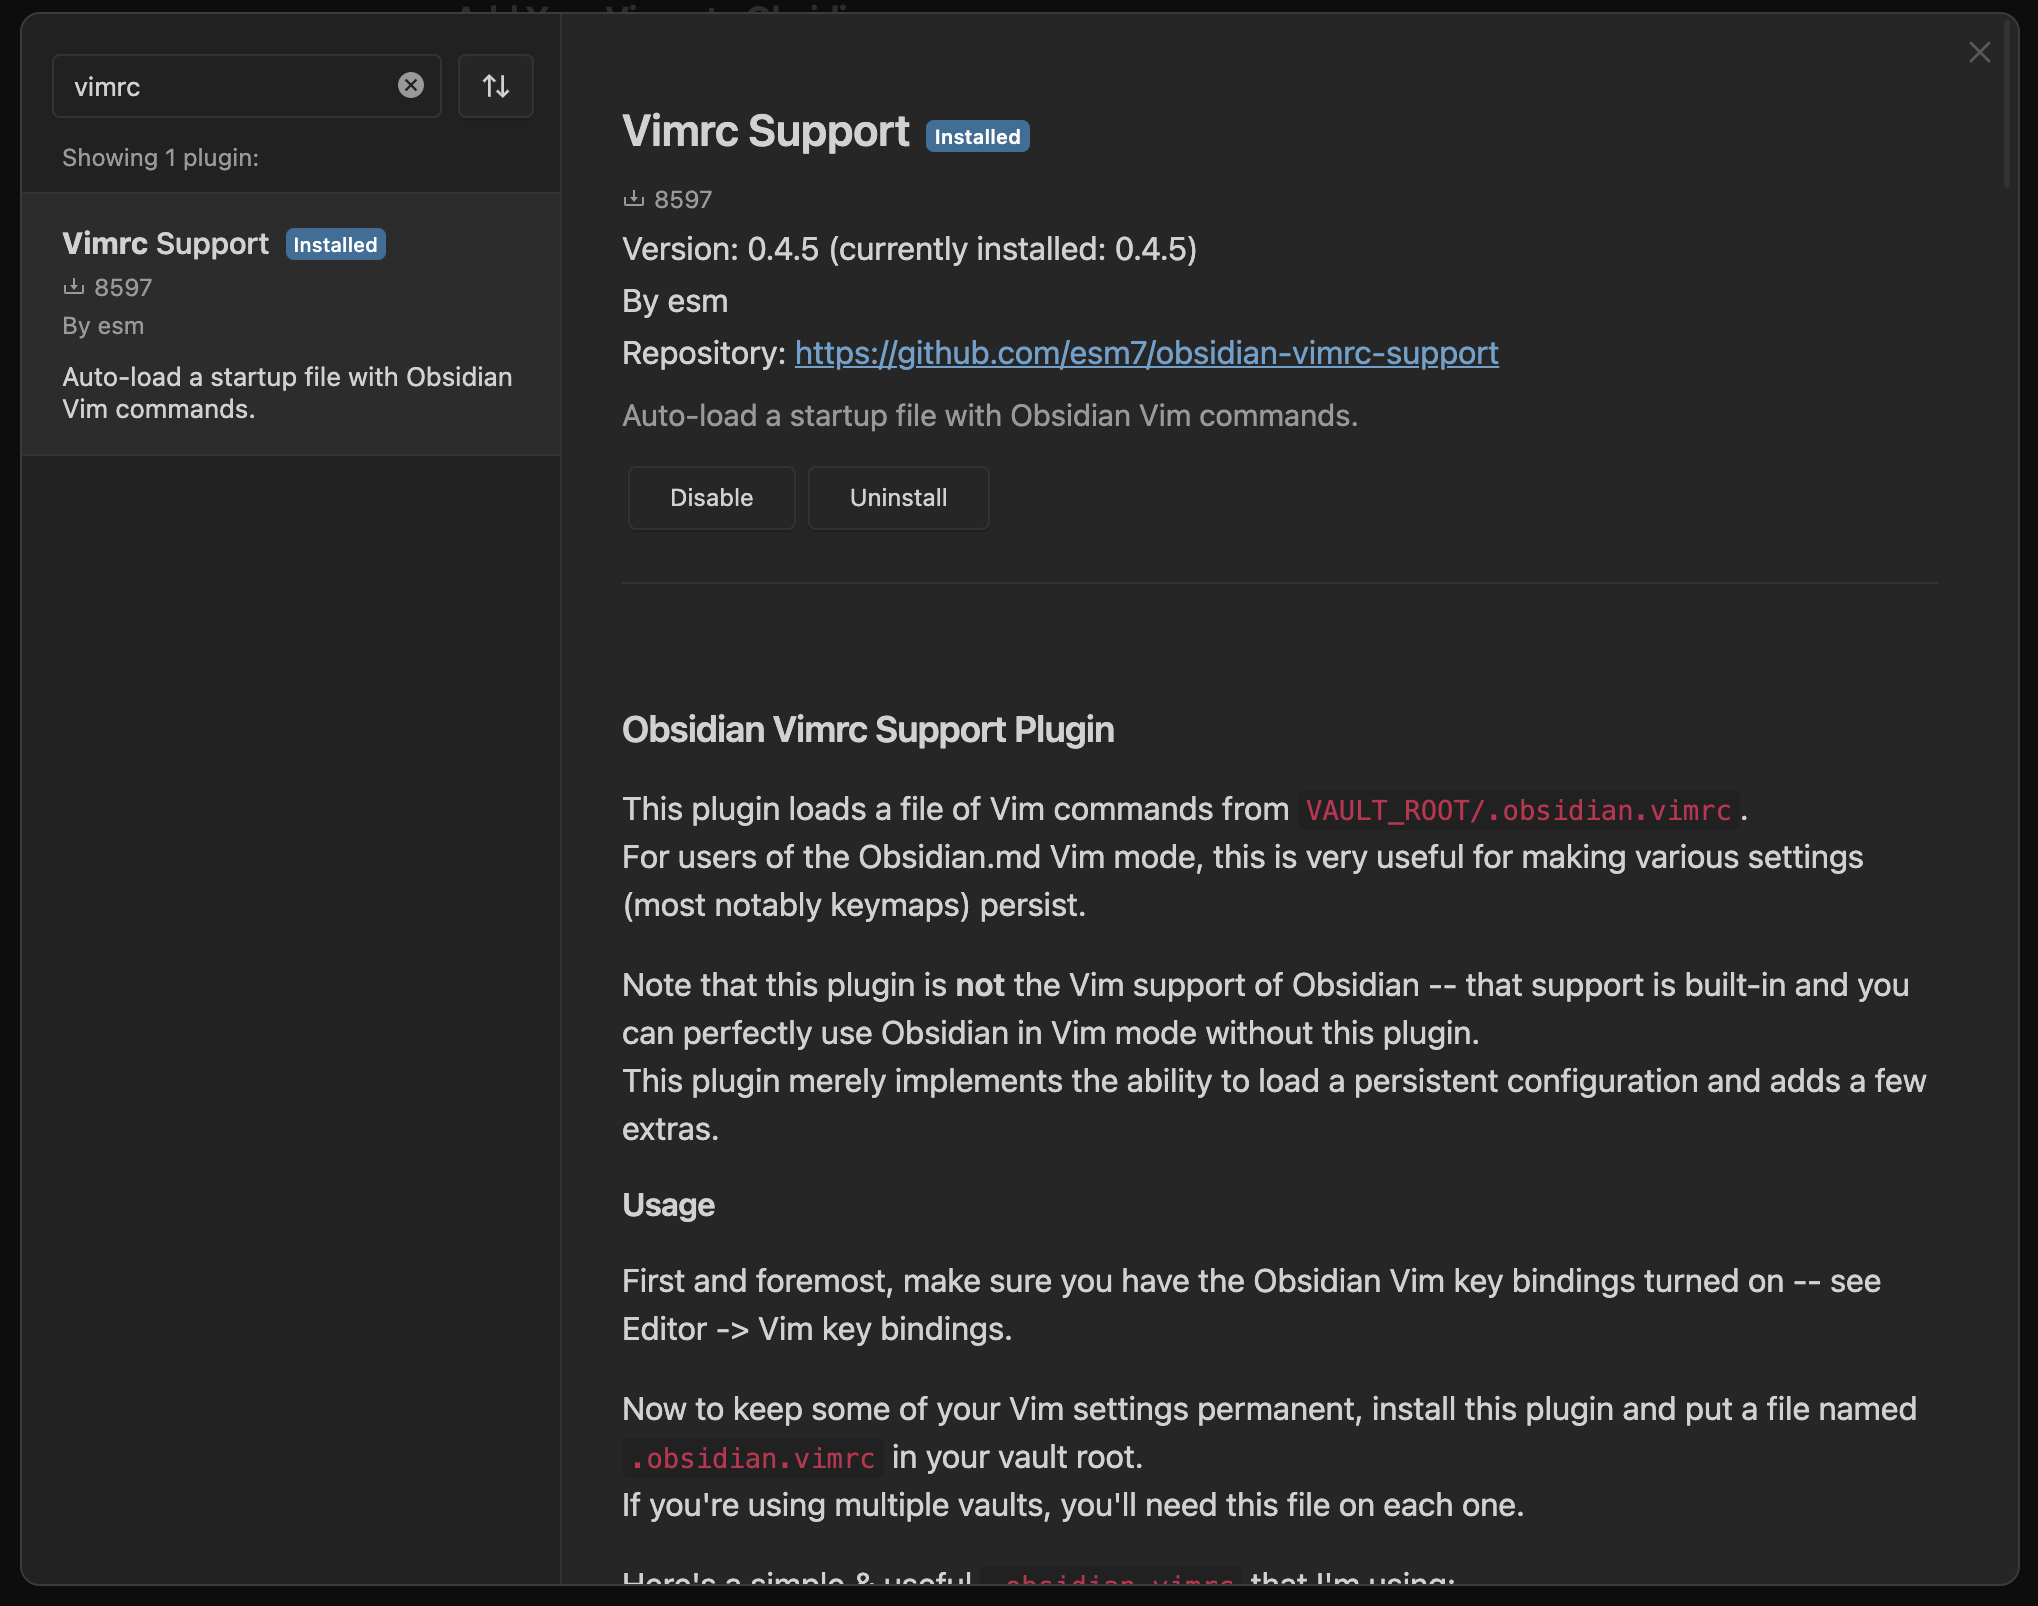 Enabling vimrc support plugin